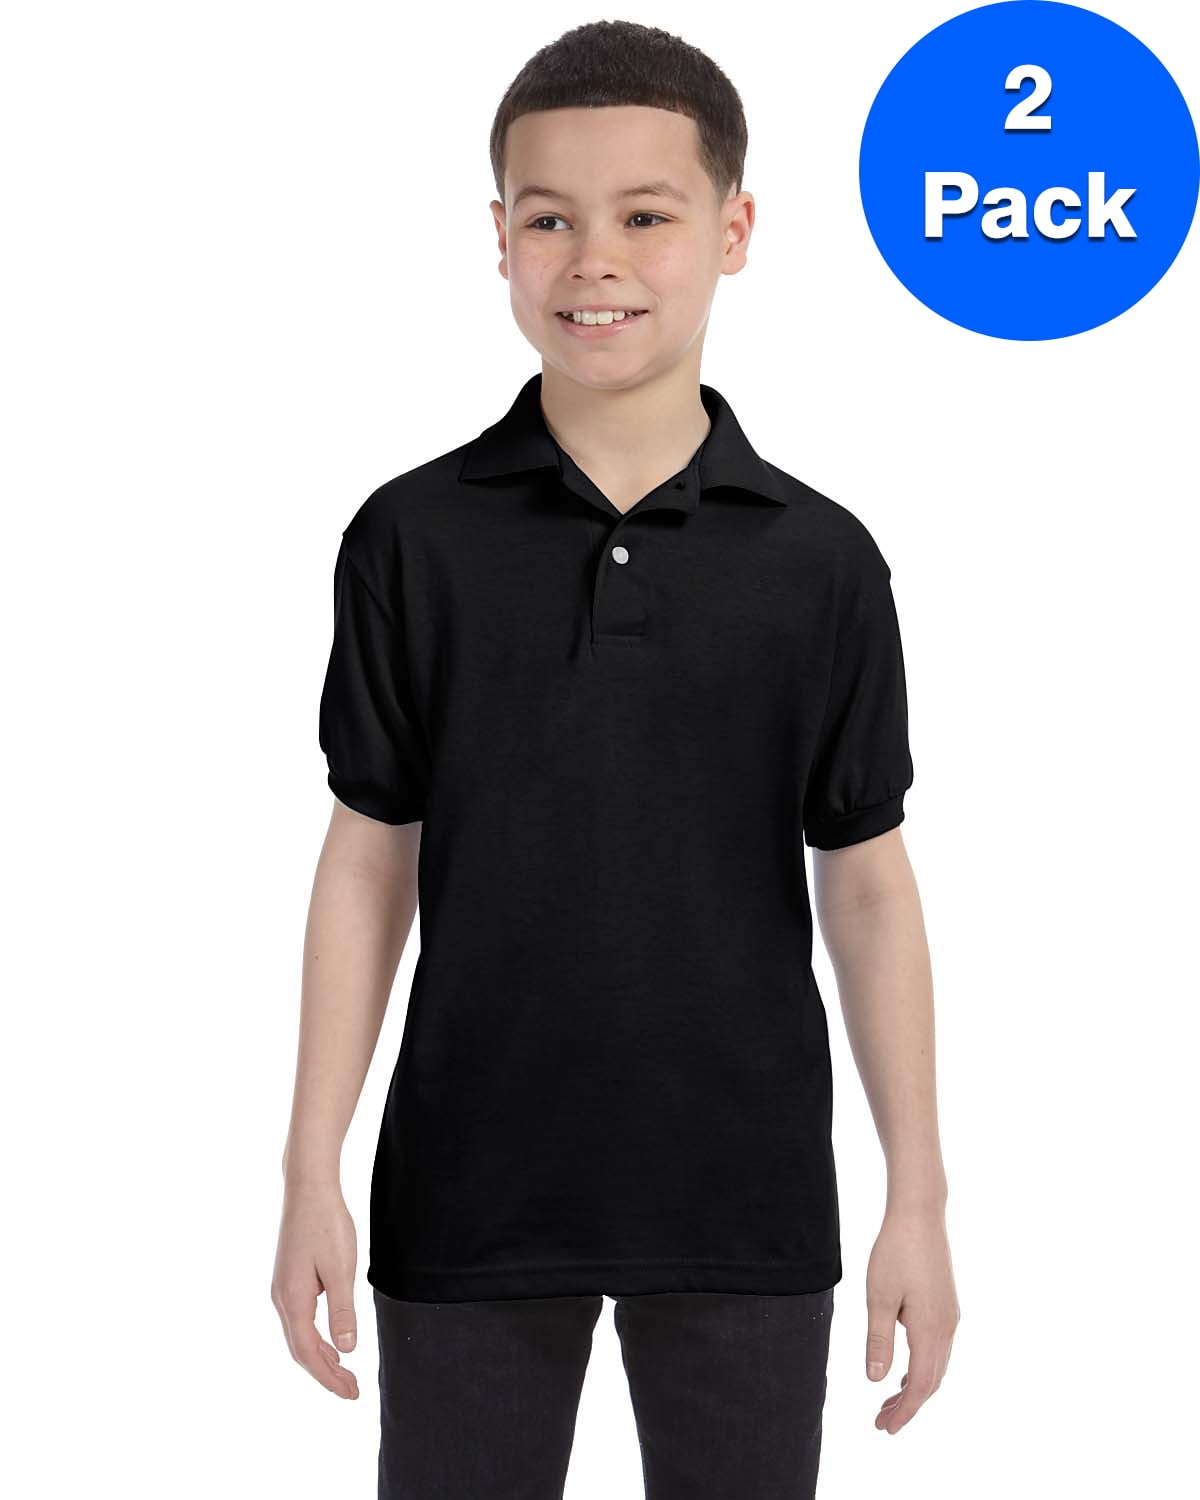 Adult Kids Plain Pique Polo Shirts Boys Mens Short Sleeve Summer T Shirt Tee Top 